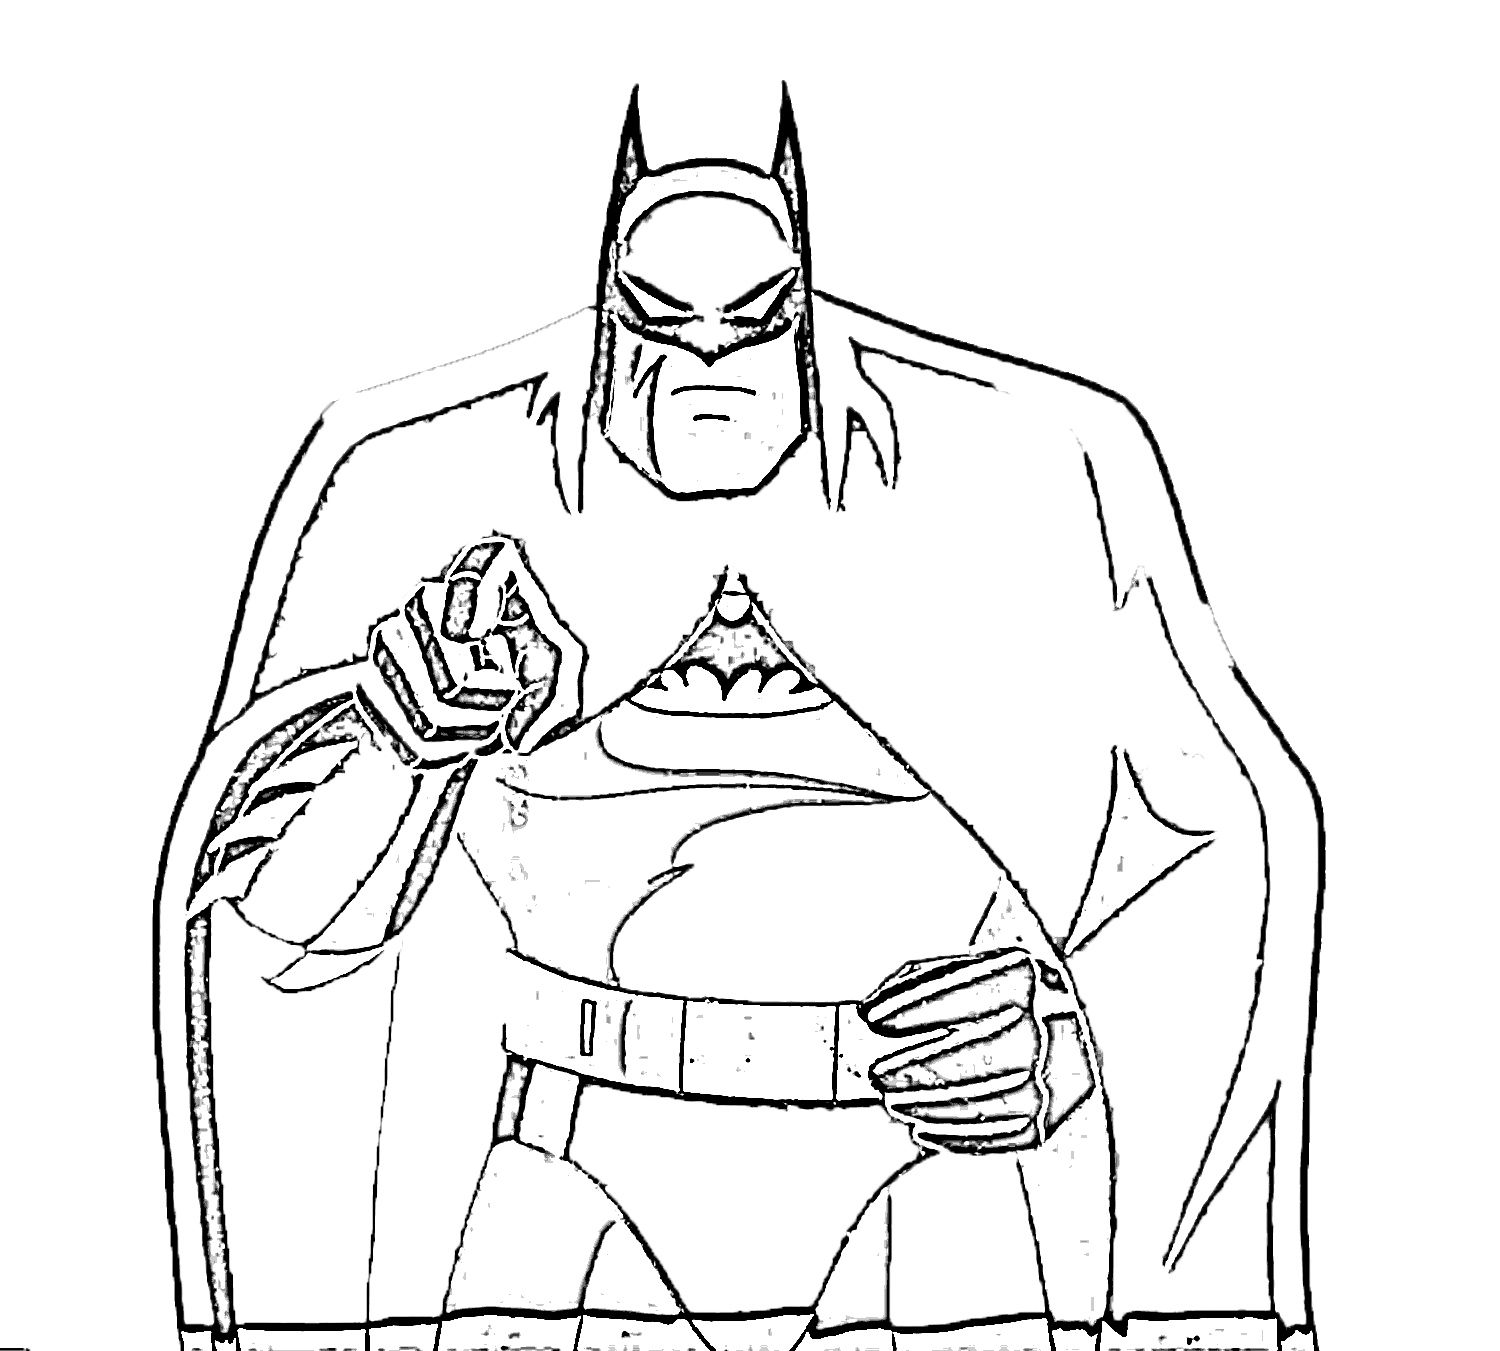  Talking batman coloring pages batman free coloring pages batman free kids